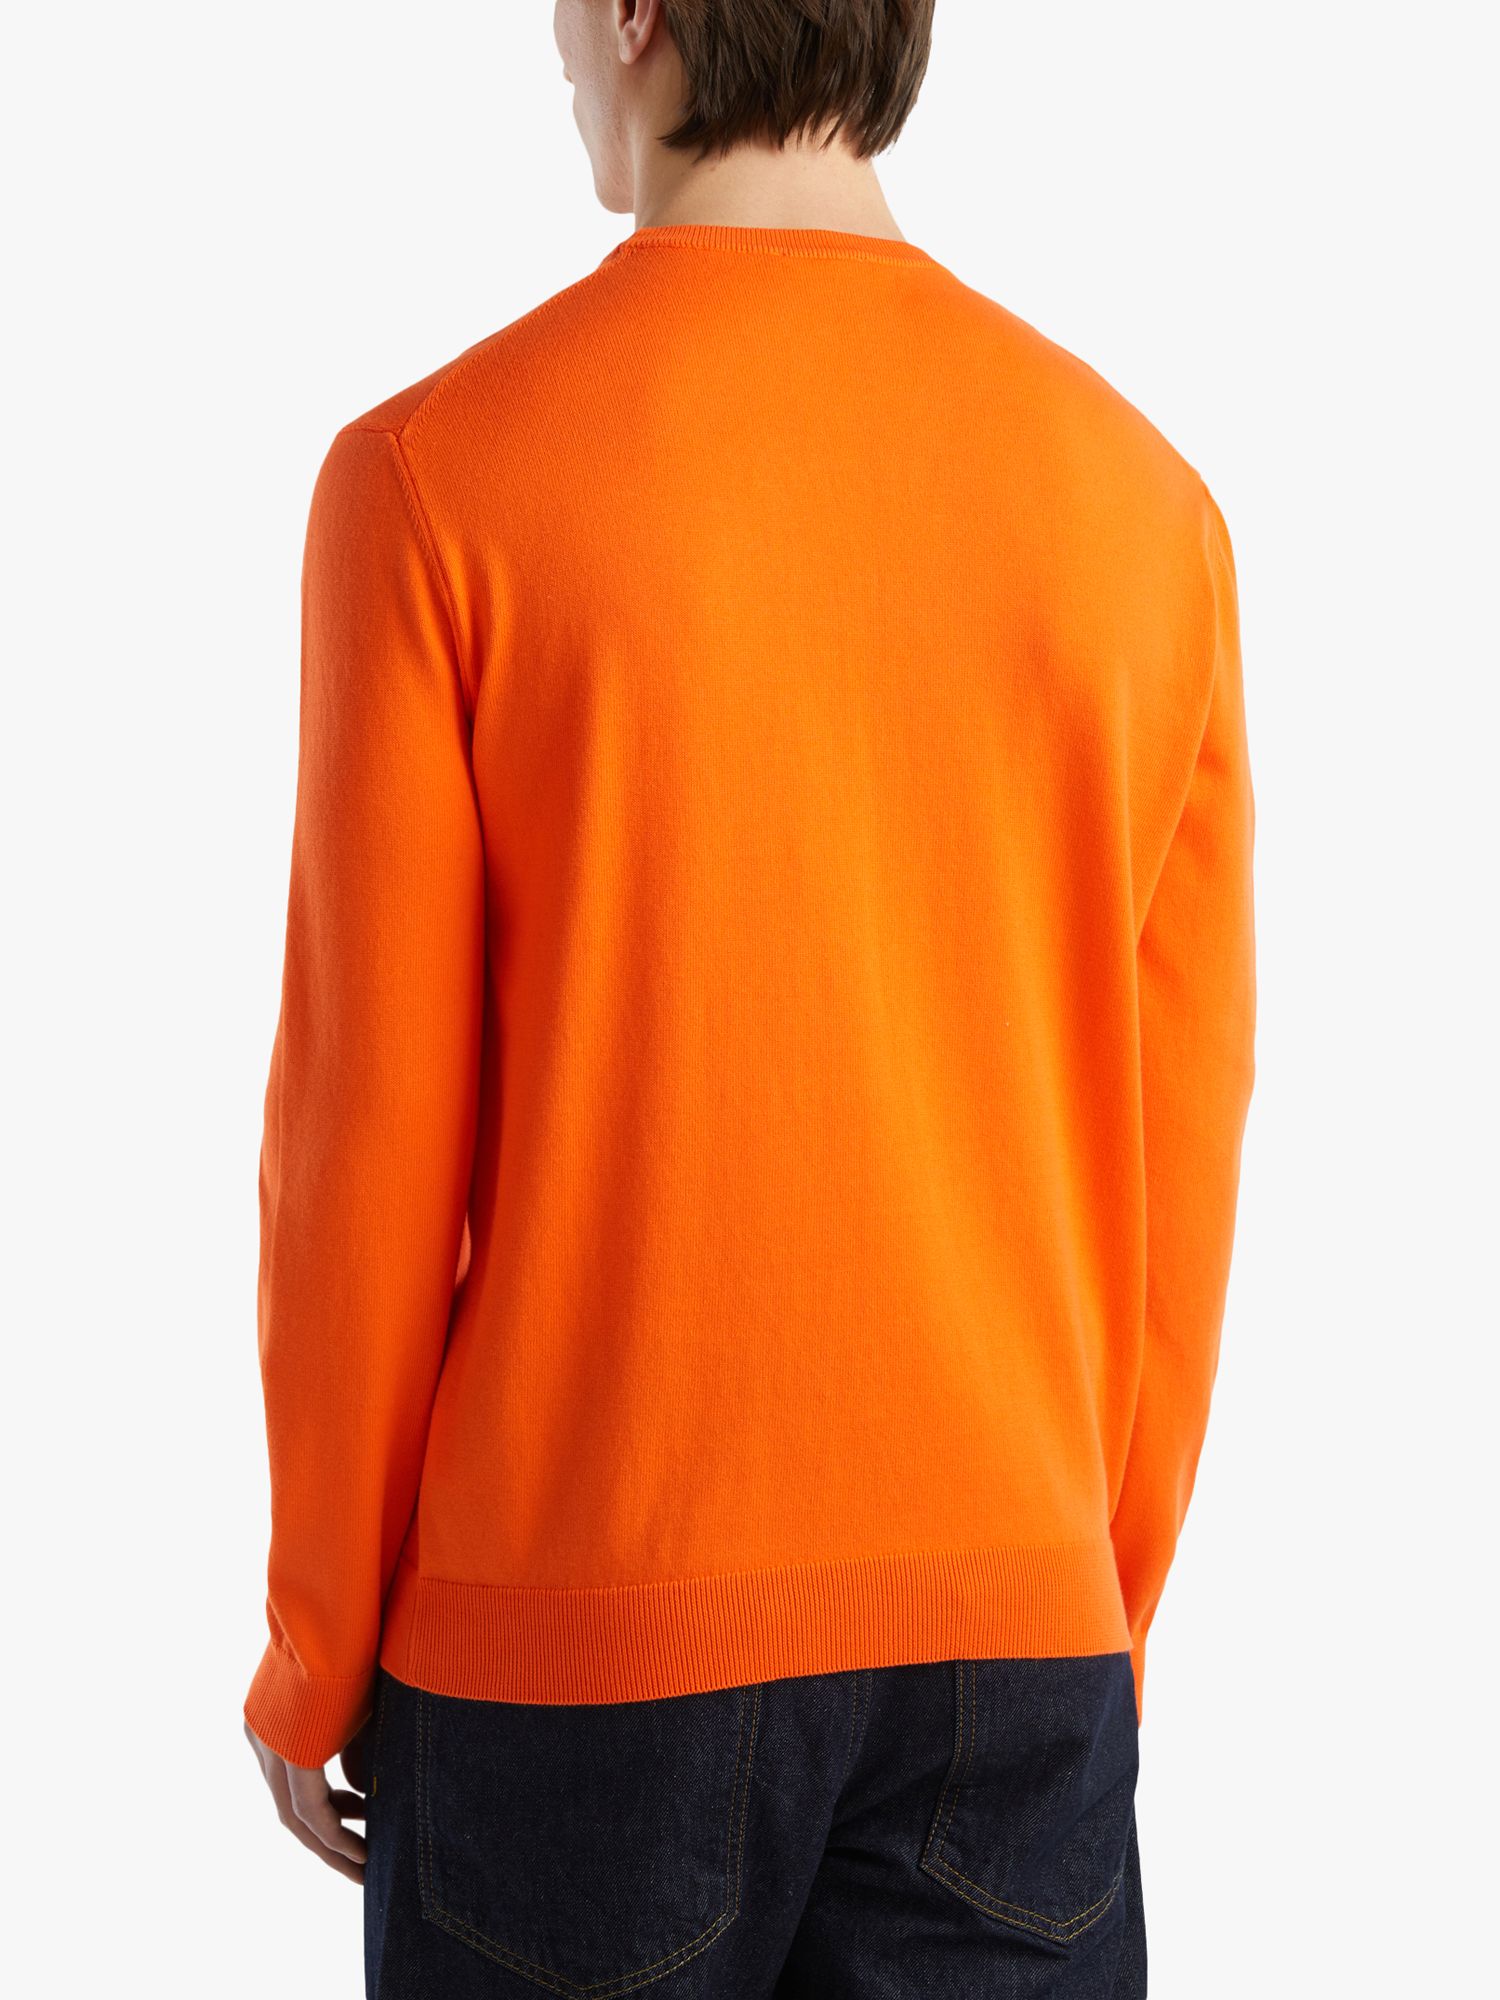 Benetton Cotton Crew Neck Sweater, Orange, L